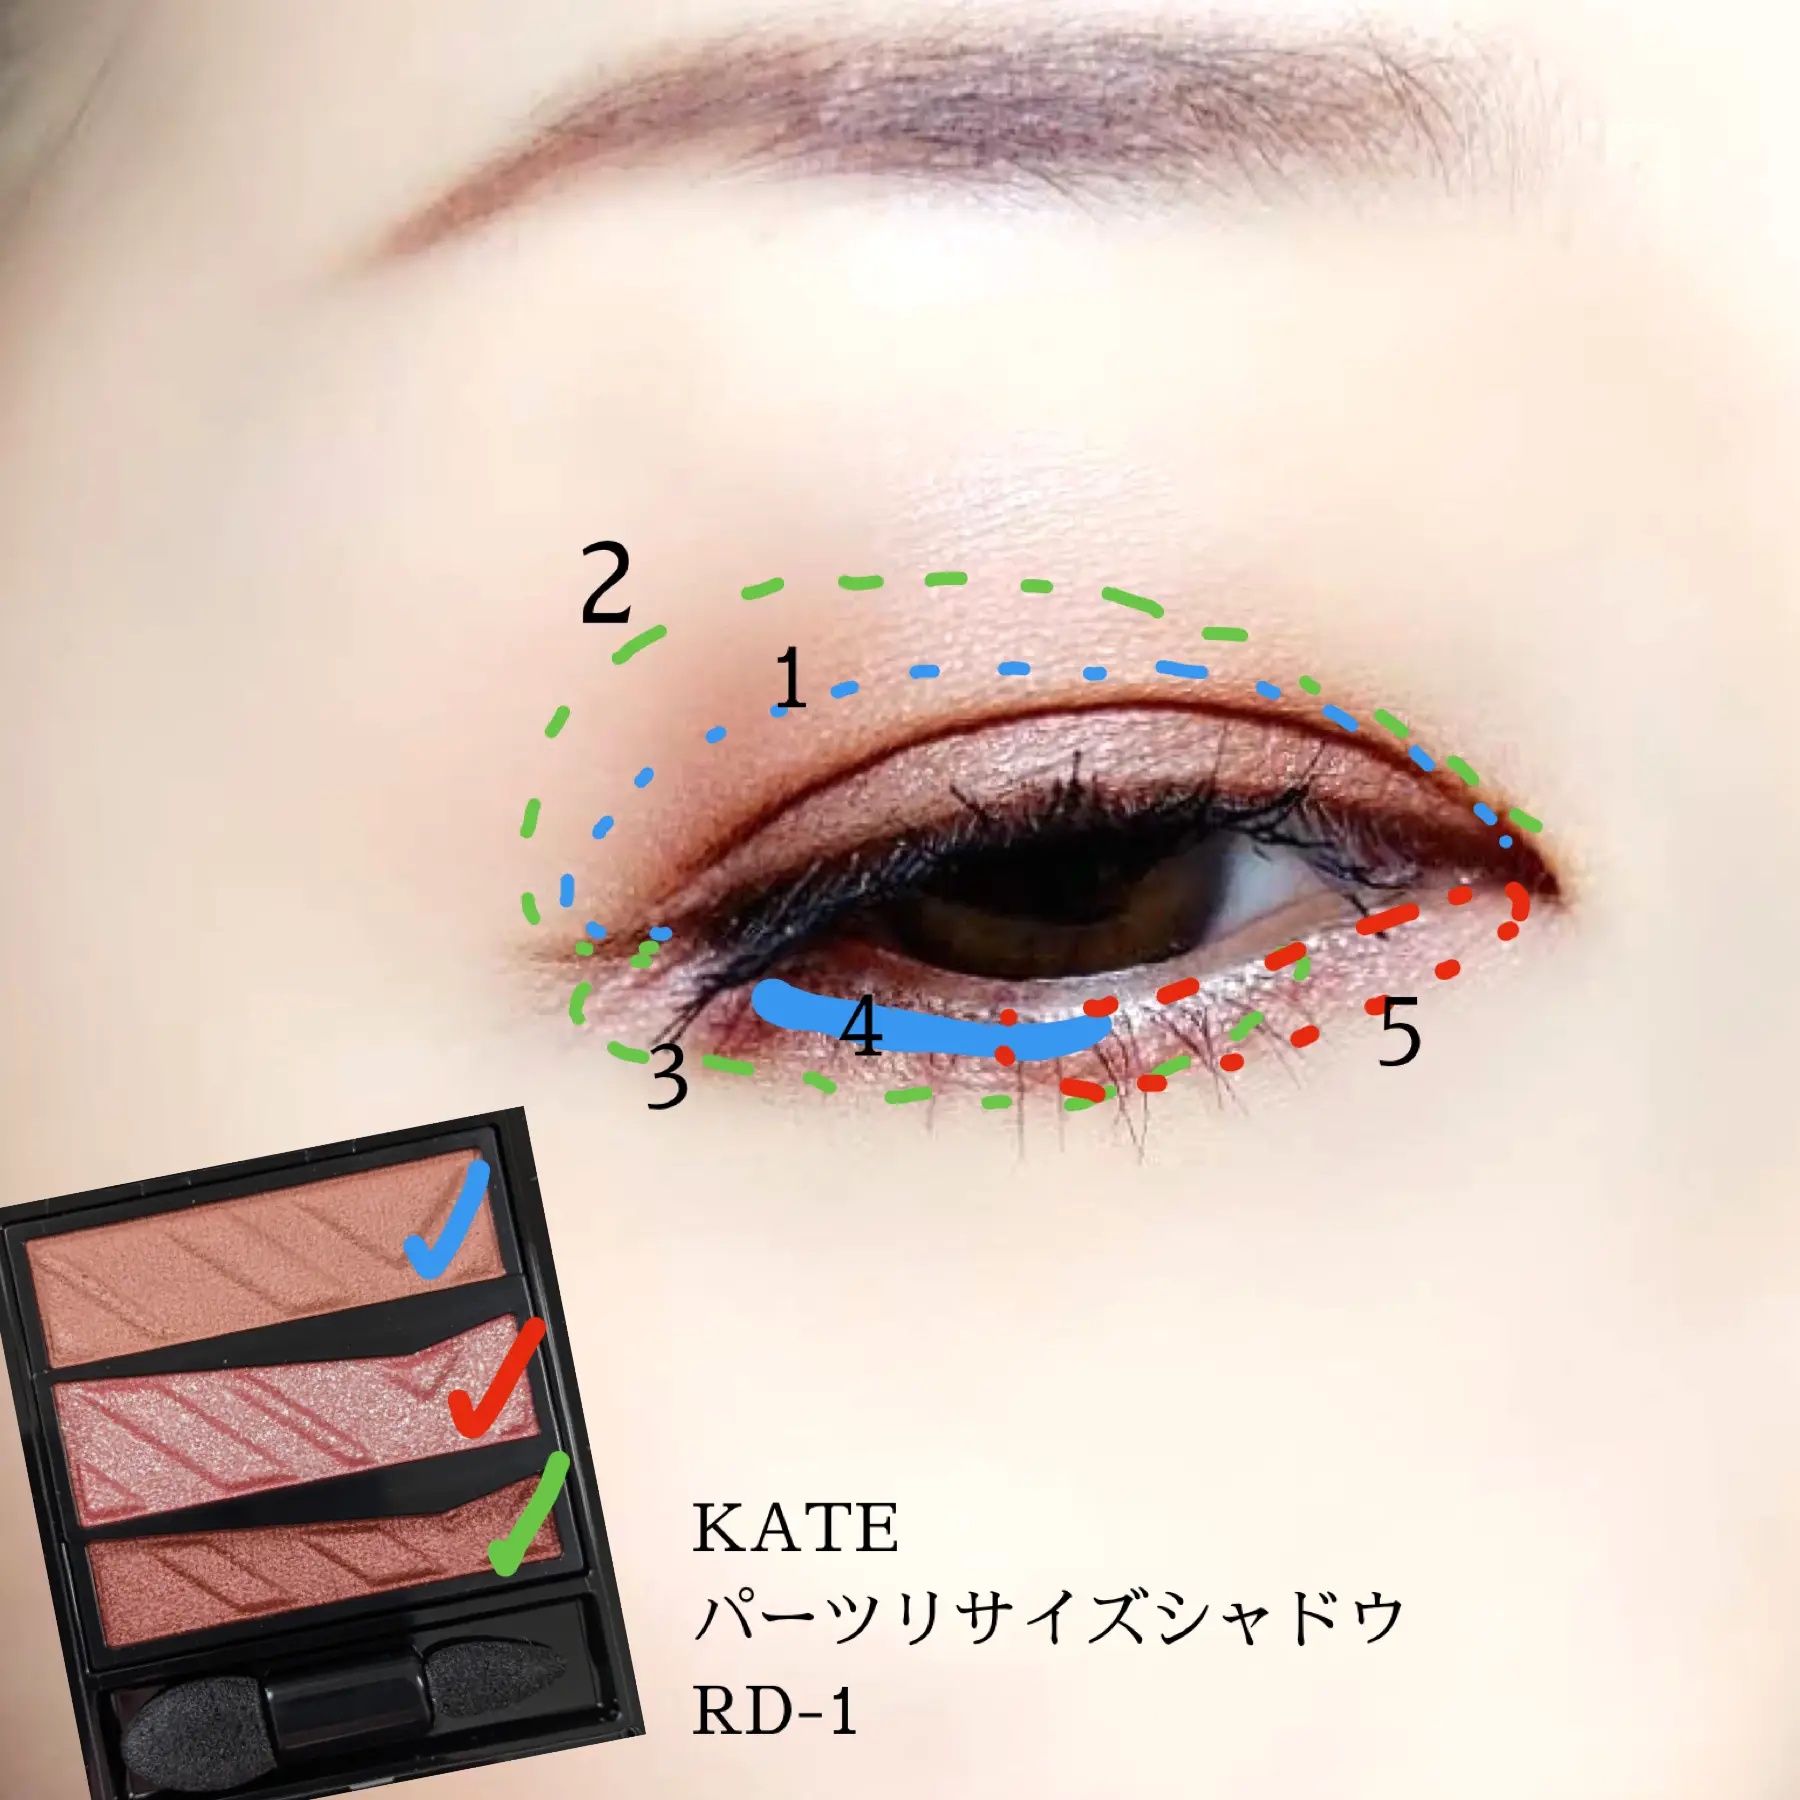 5 MINUTE Glitter Eye Makeup Tutorial